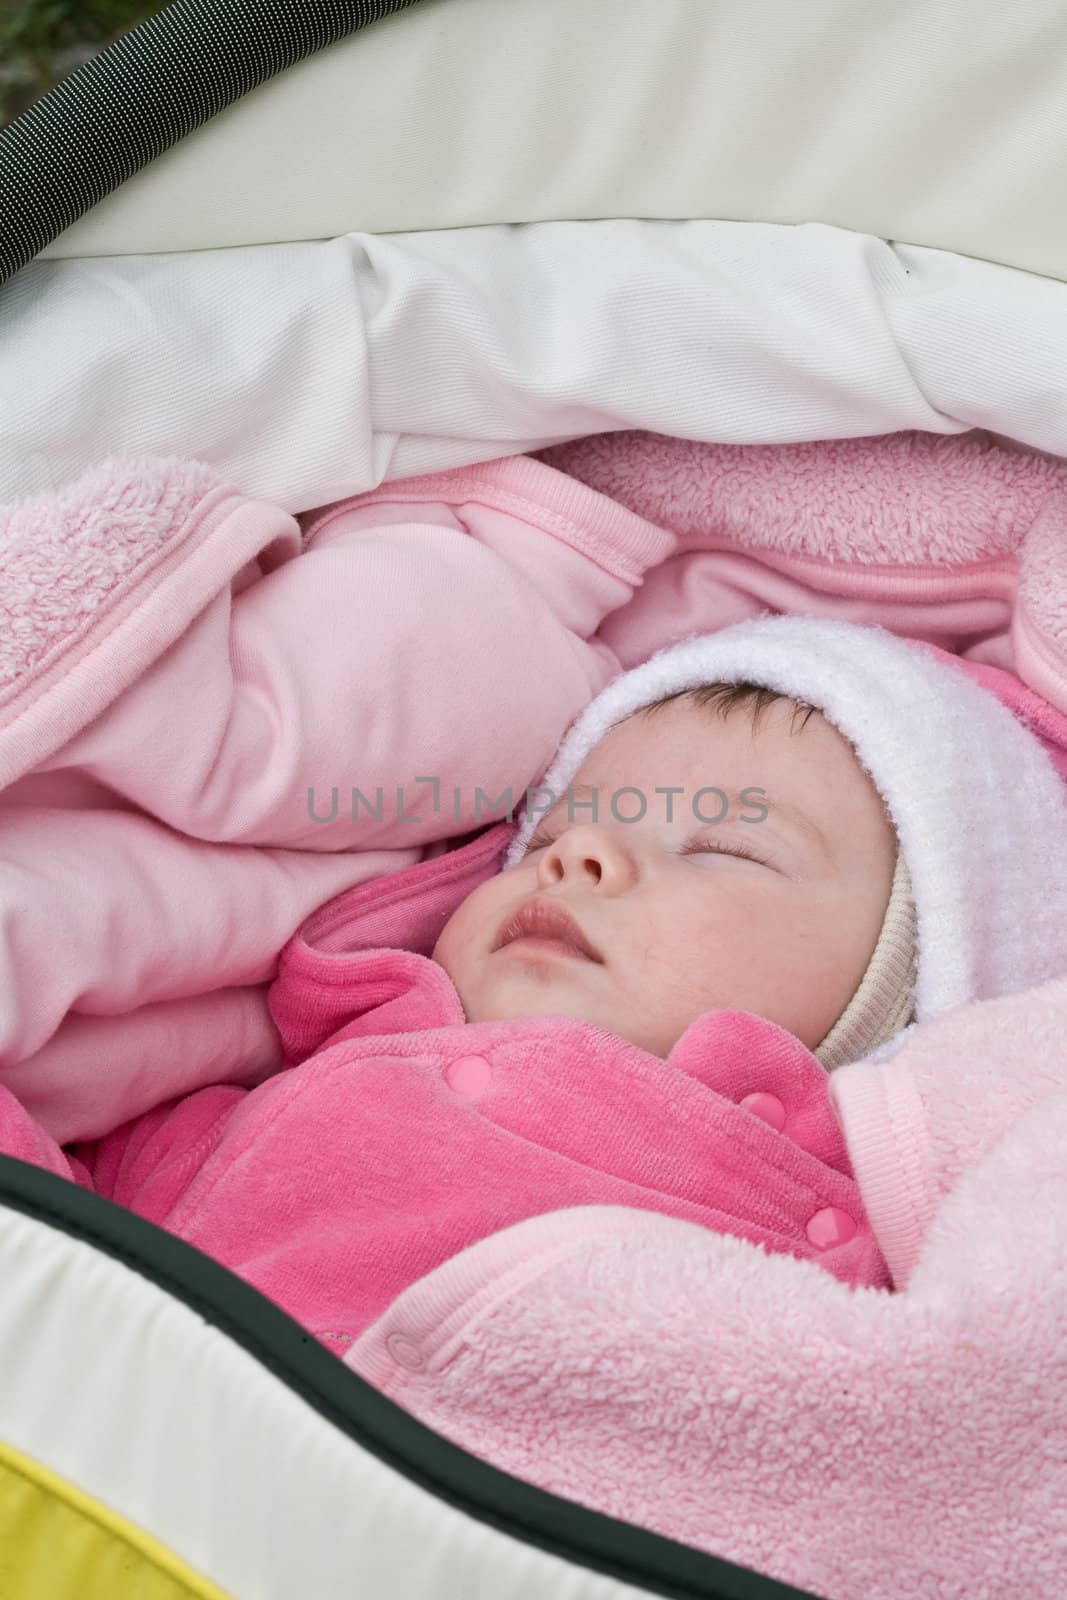 people series: little girl are sleepping in cradle